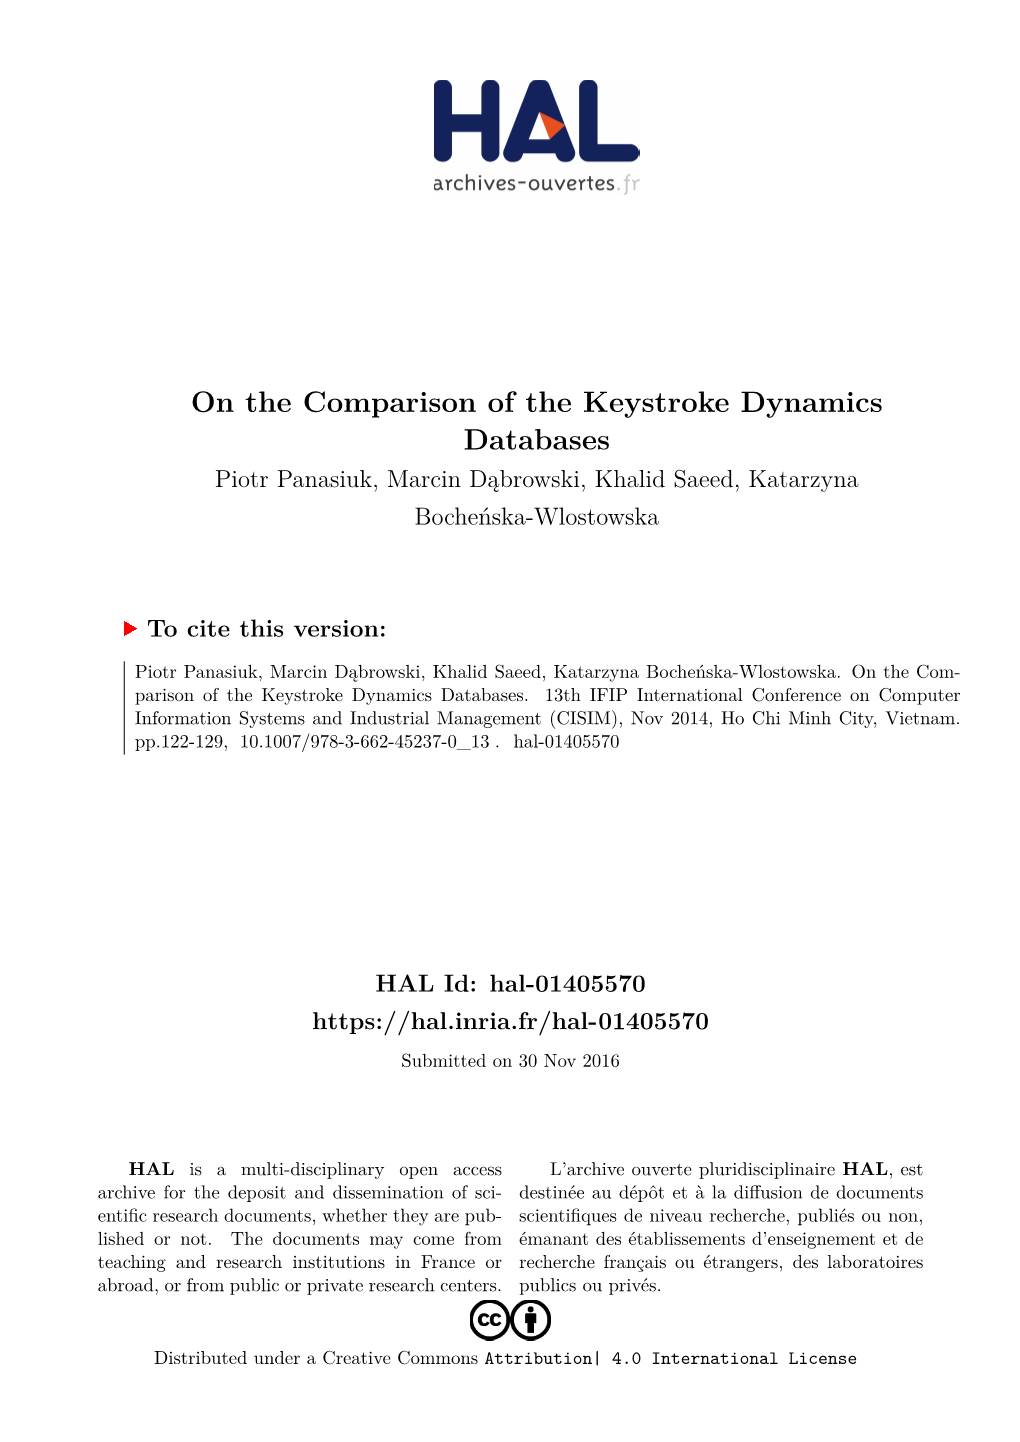 On the Comparison of the Keystroke Dynamics Databases Piotr Panasiuk, Marcin Dąbrowski, Khalid Saeed, Katarzyna Bocheńska-Wlostowska